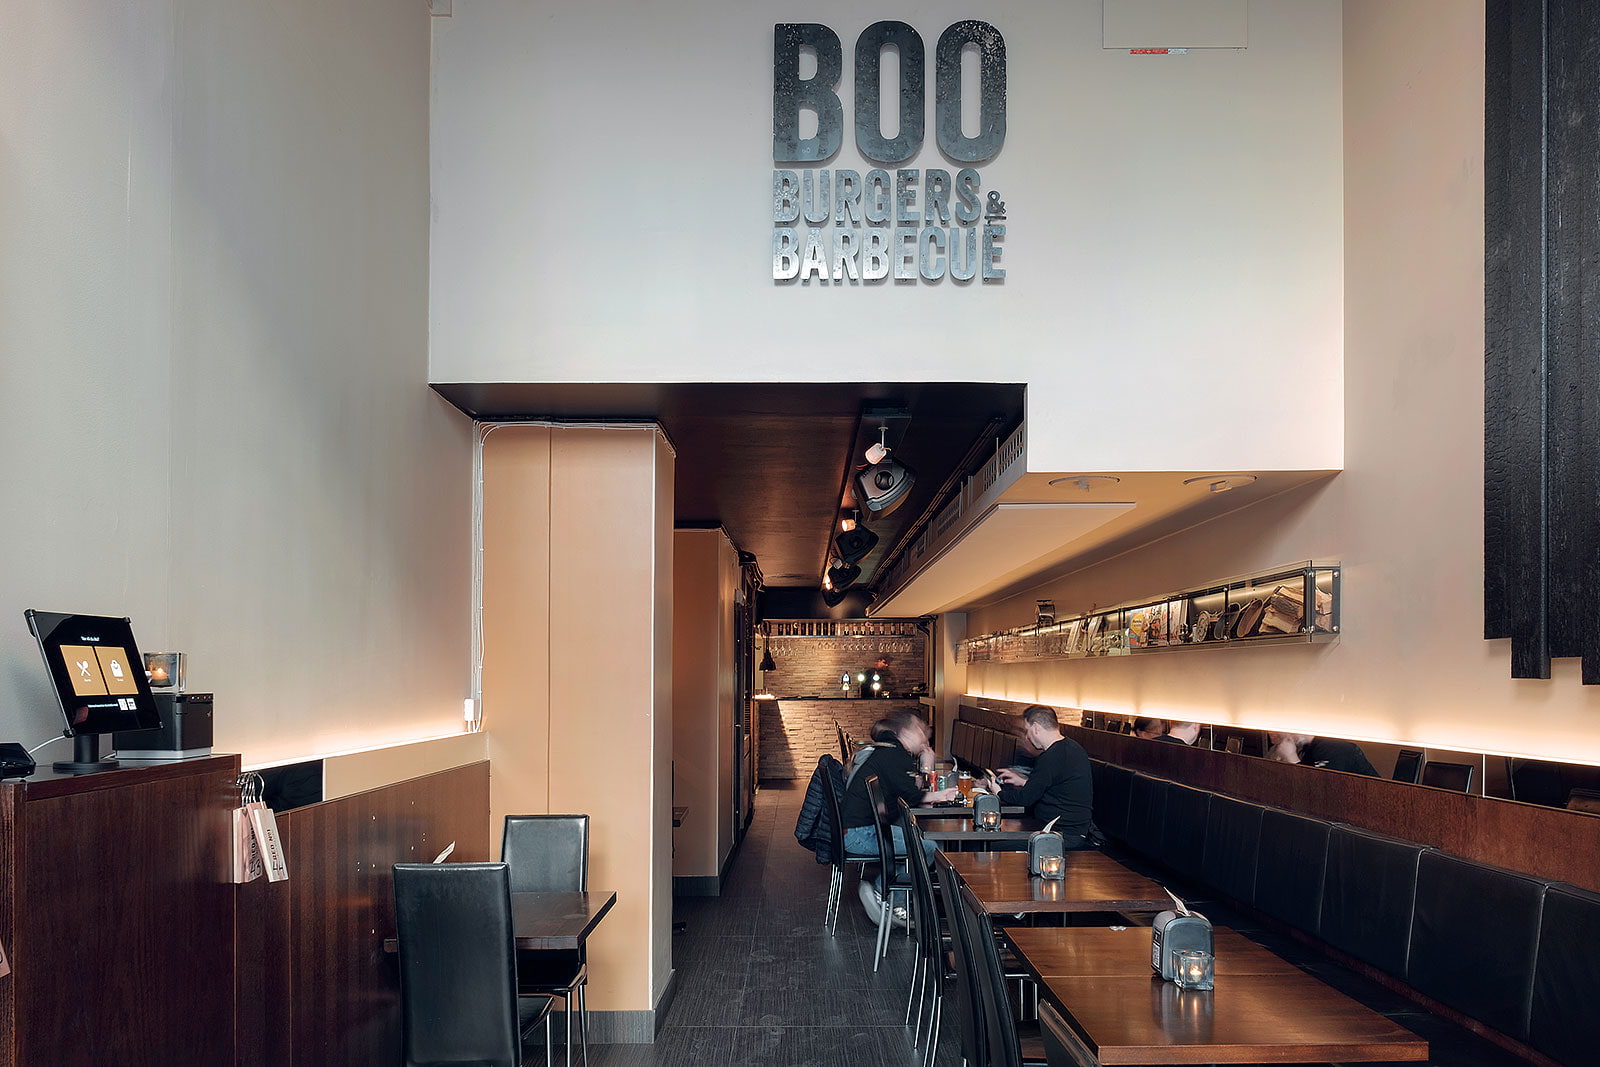 BOO Burgers & Barbecue Södermalm – American restaurants